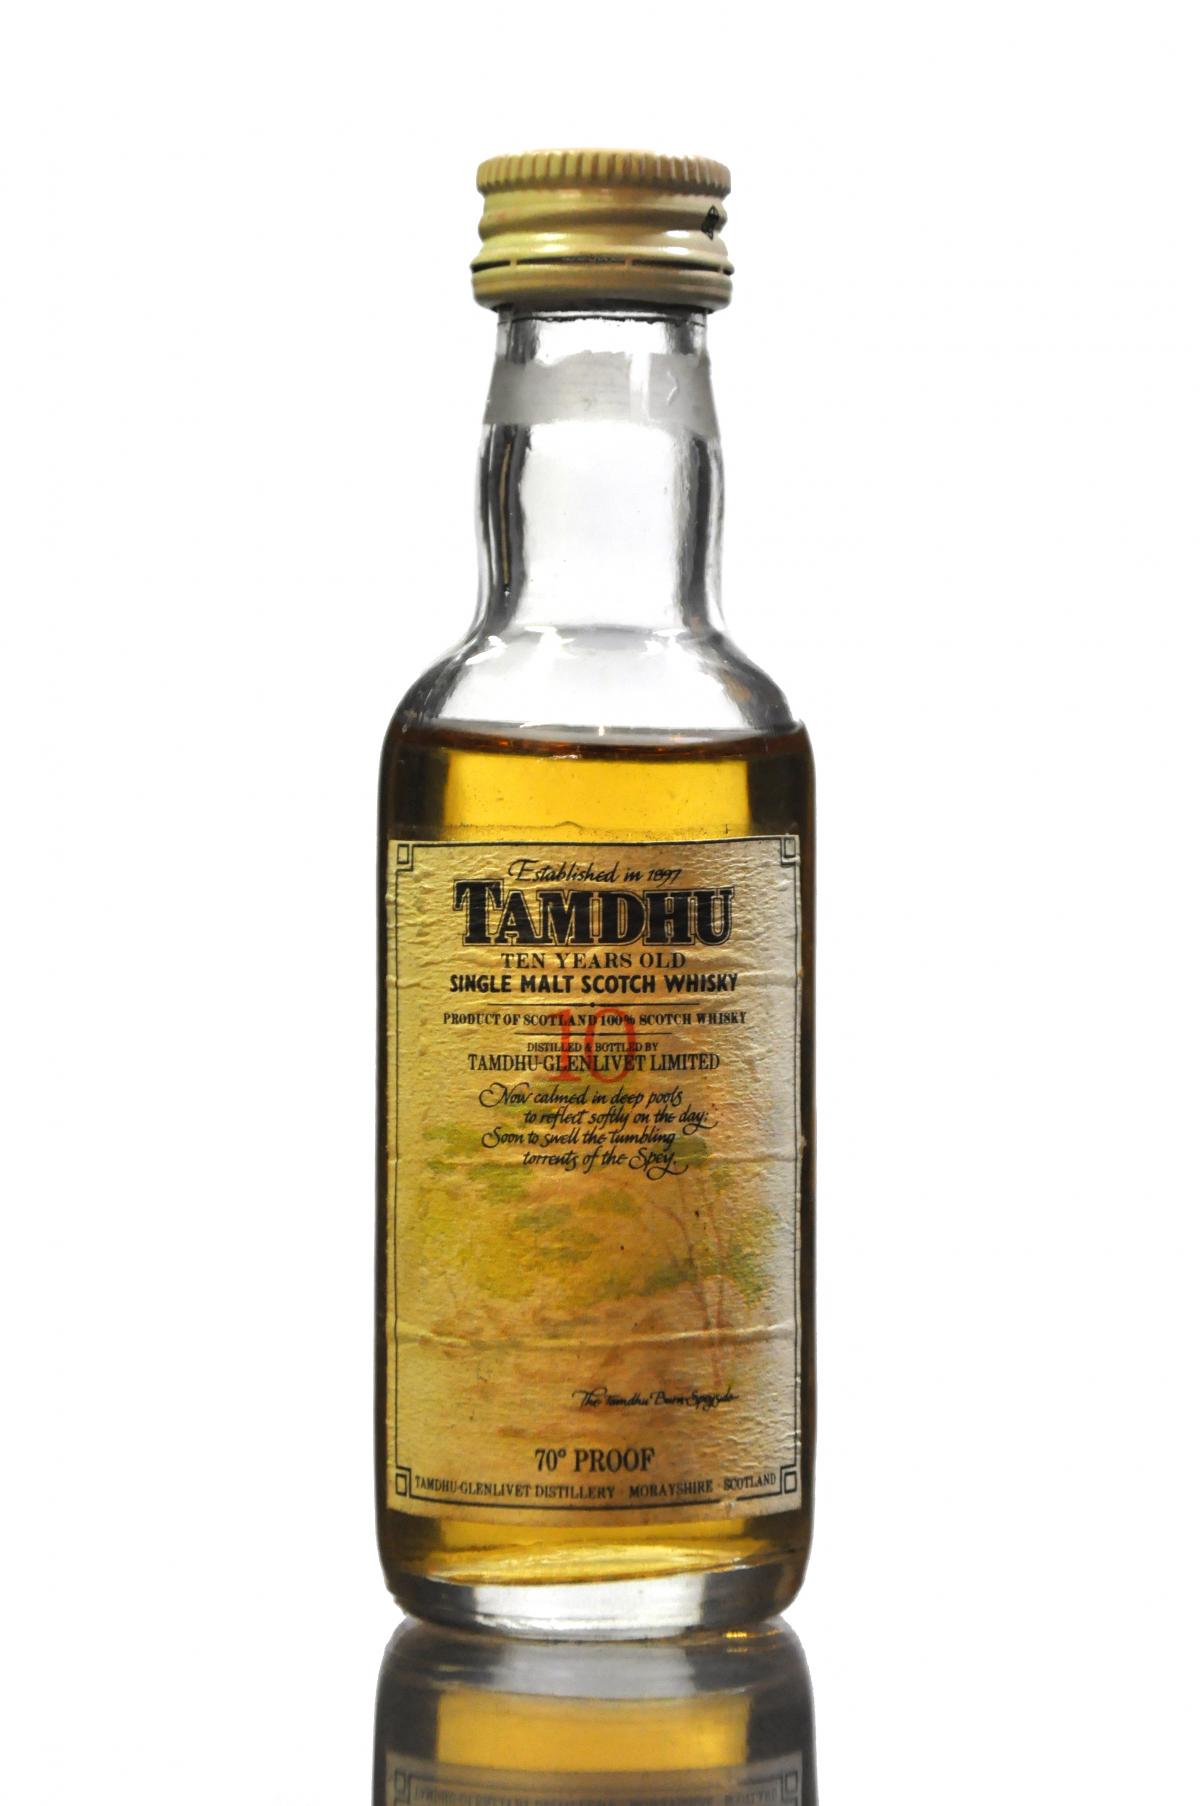 Tamdhu 10 Year Old - 70 Proof Miniature